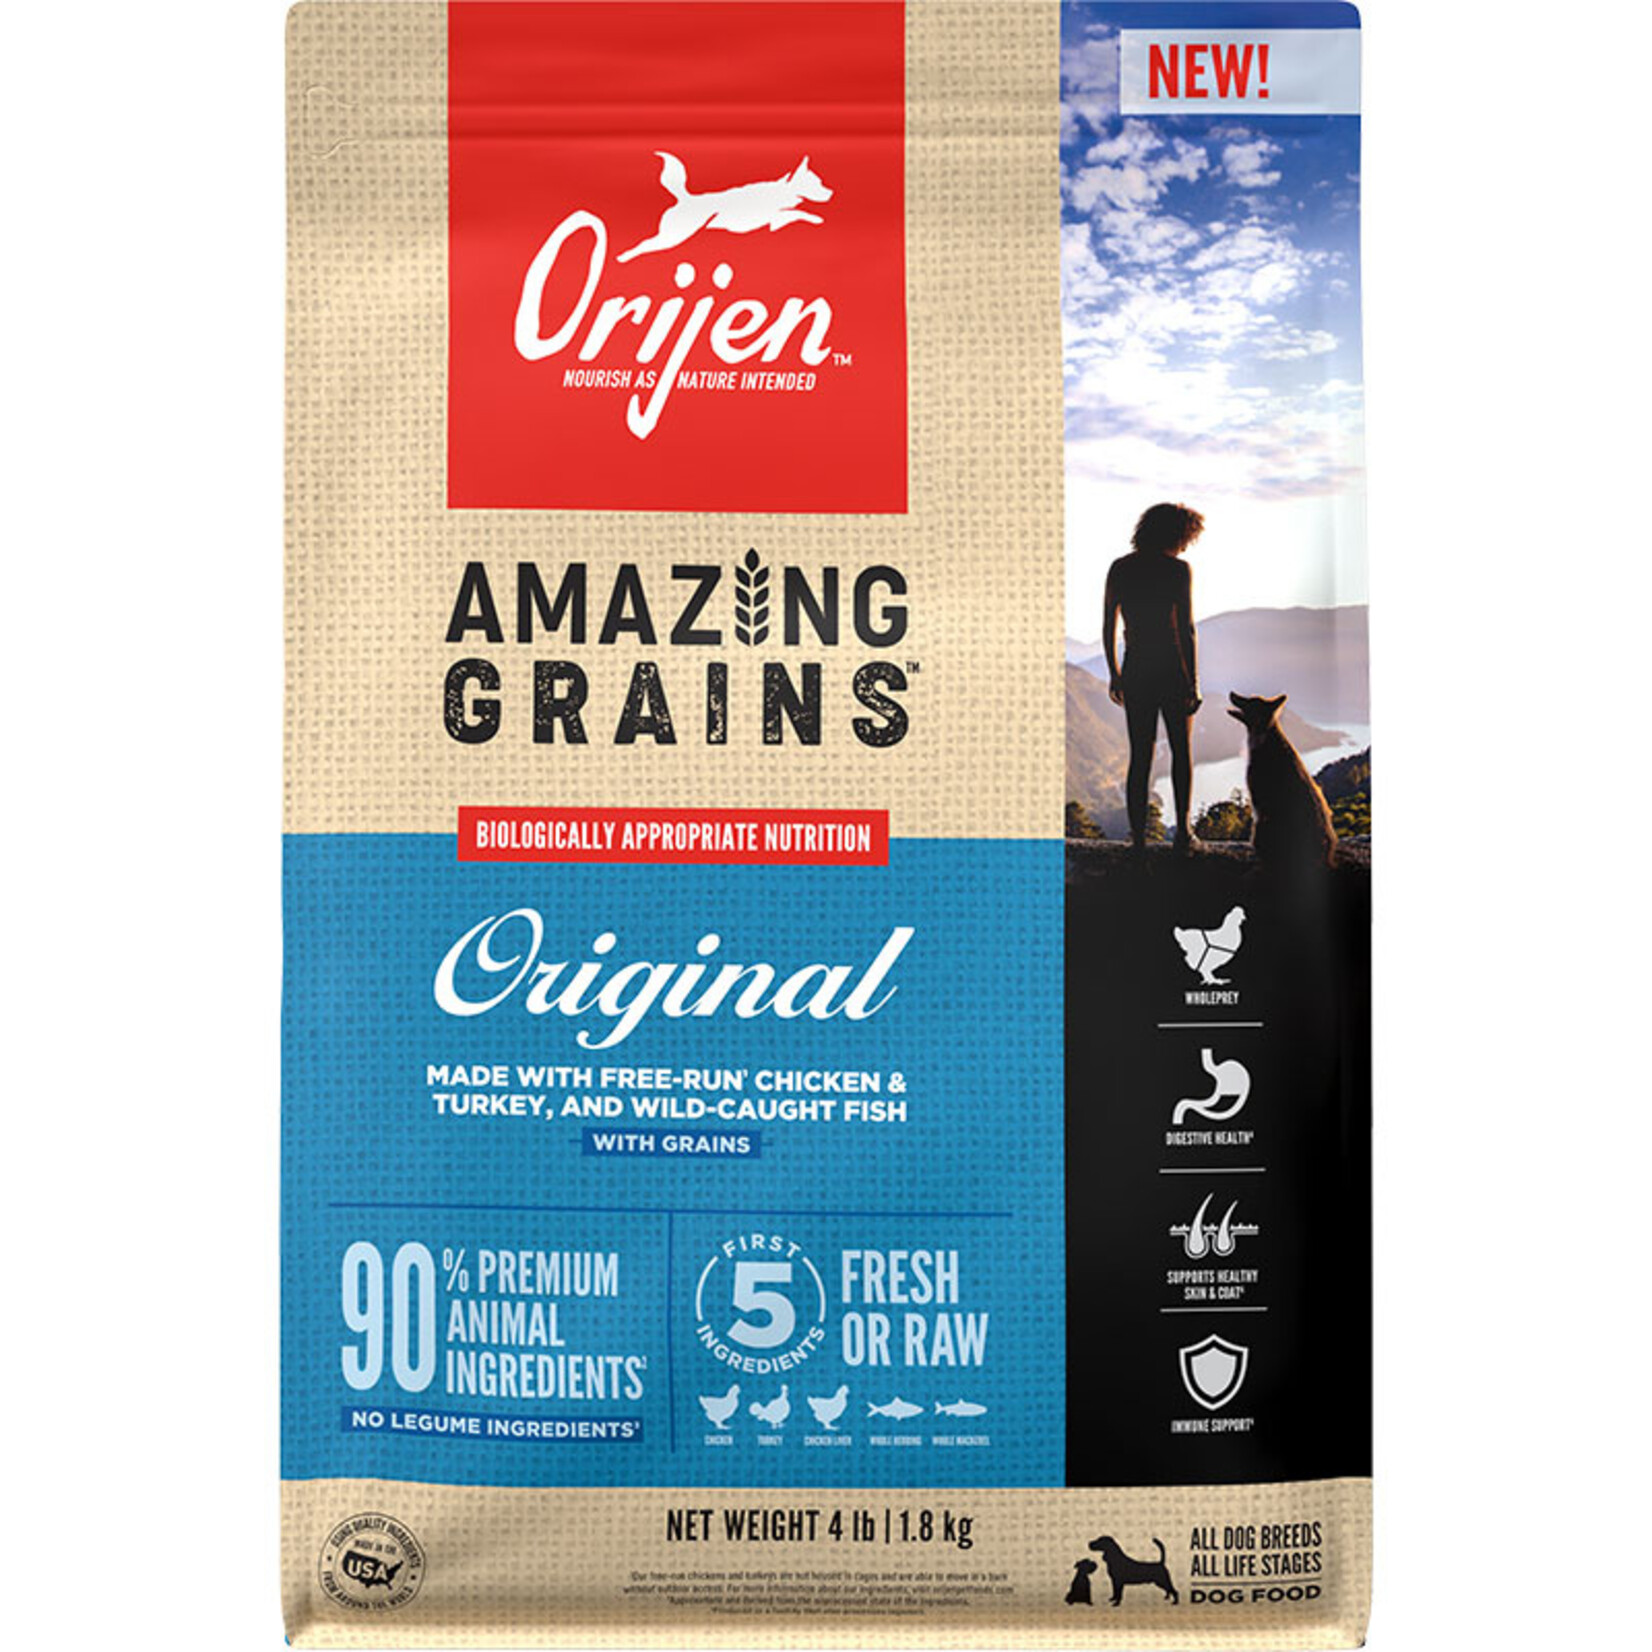 Orijen Orijen Amazing Grains Original 4lb